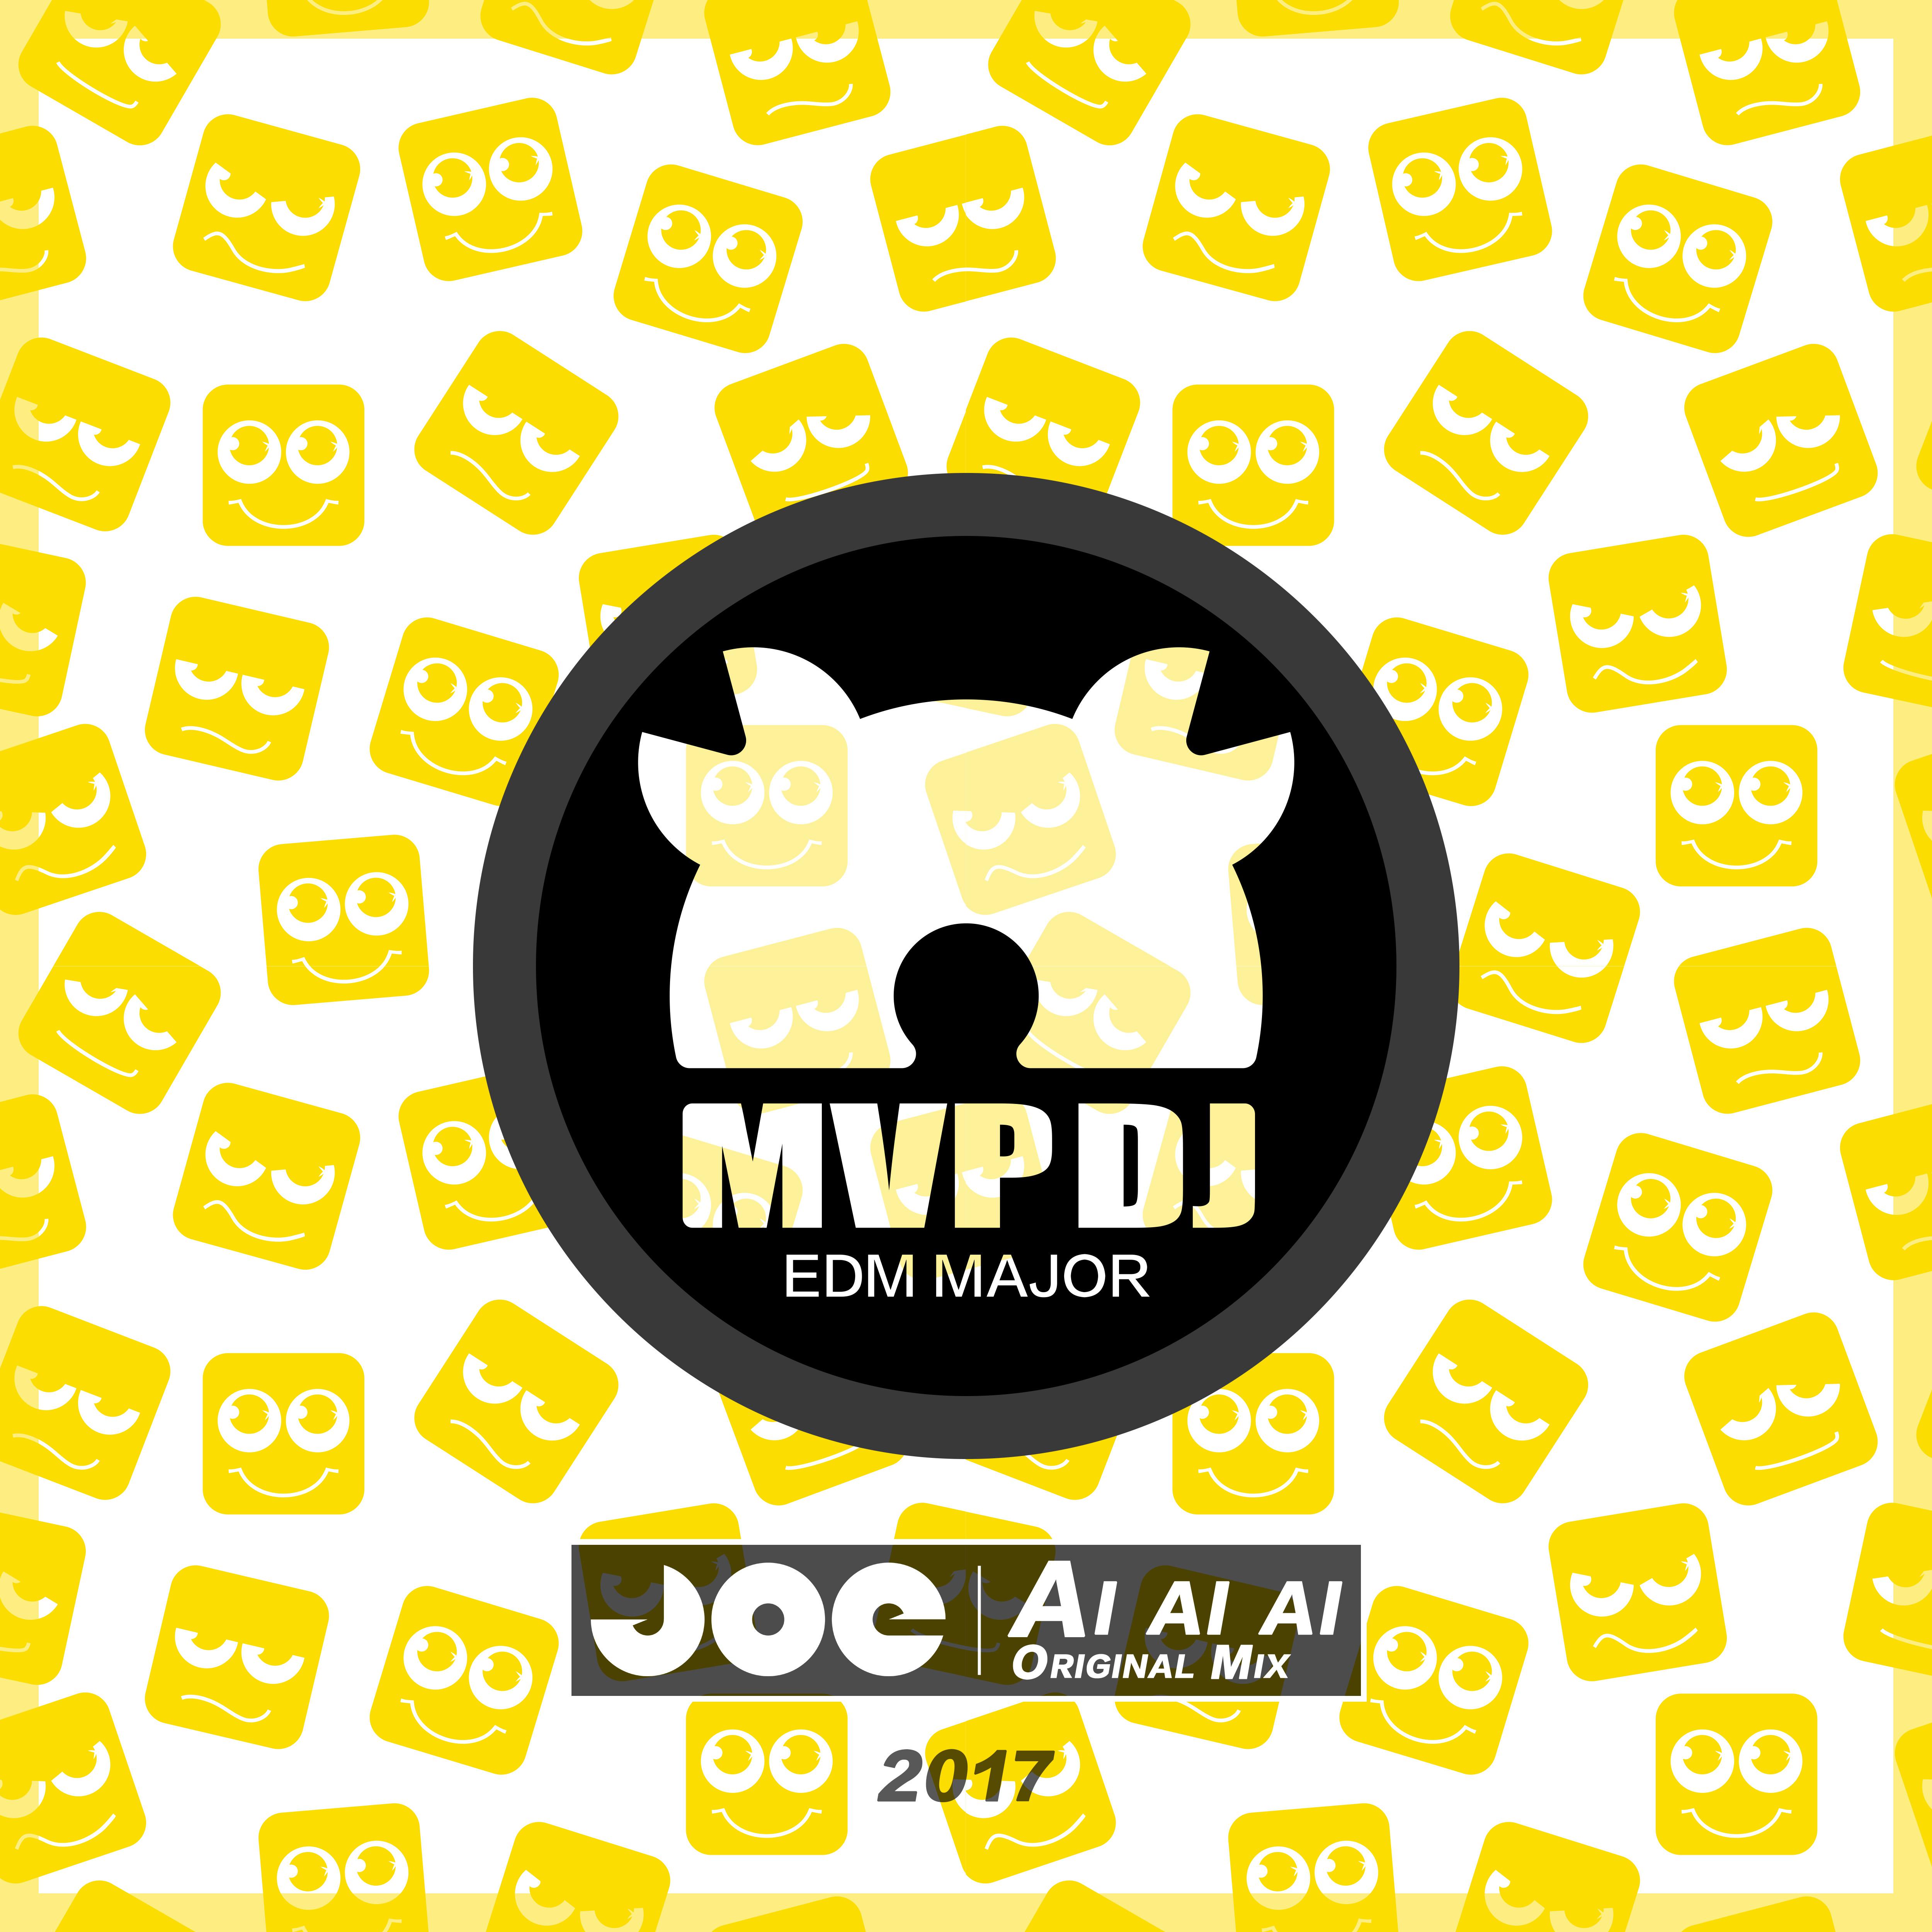 DJ JOE - Ai Ai Ai (Extended Remix)专辑